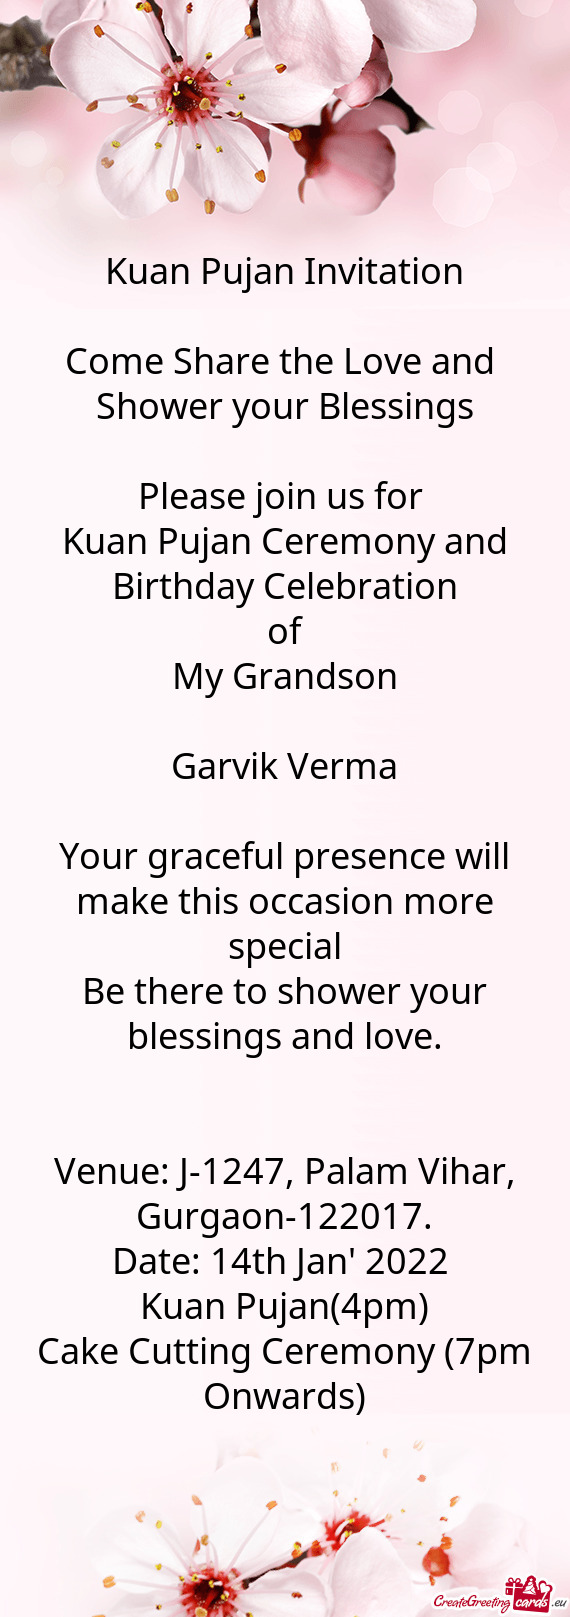 Kuan Pujan Ceremony and Birthday Celebration